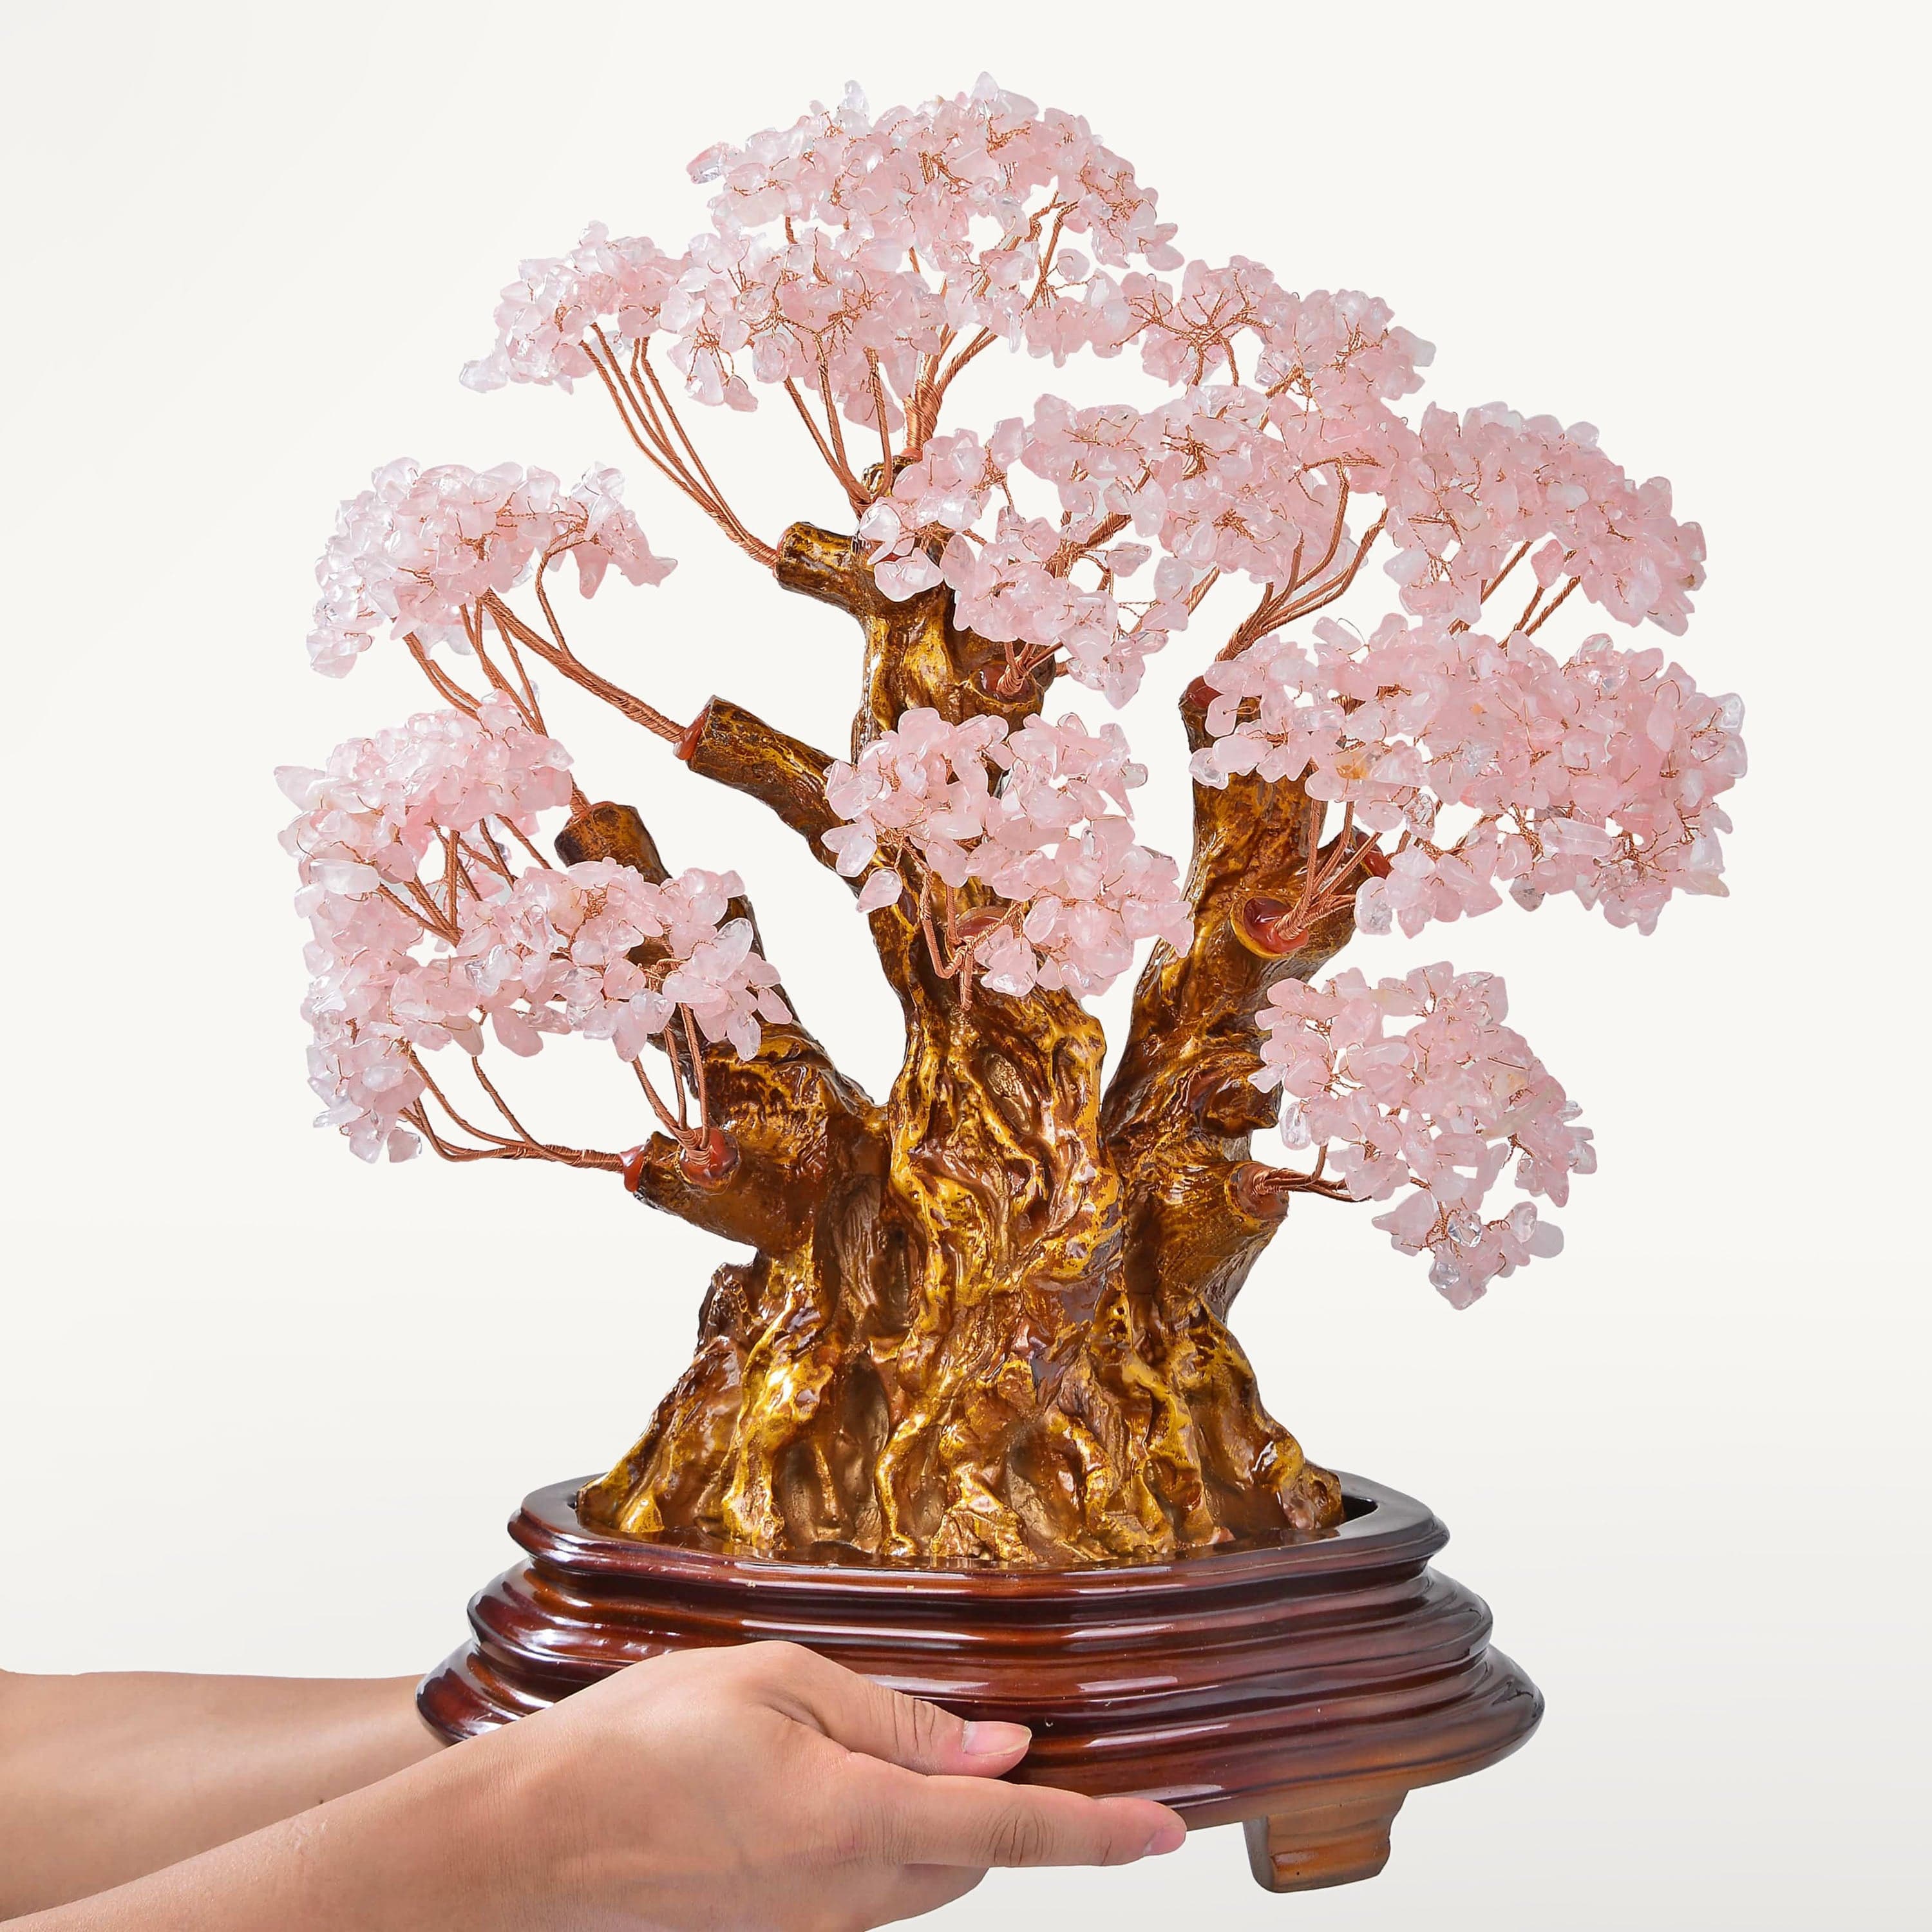 Kalifano Gemstone Trees Rose Quartz Tree of Life Centerpiece with over 2,000 Natural Gemstones K9800-RQ